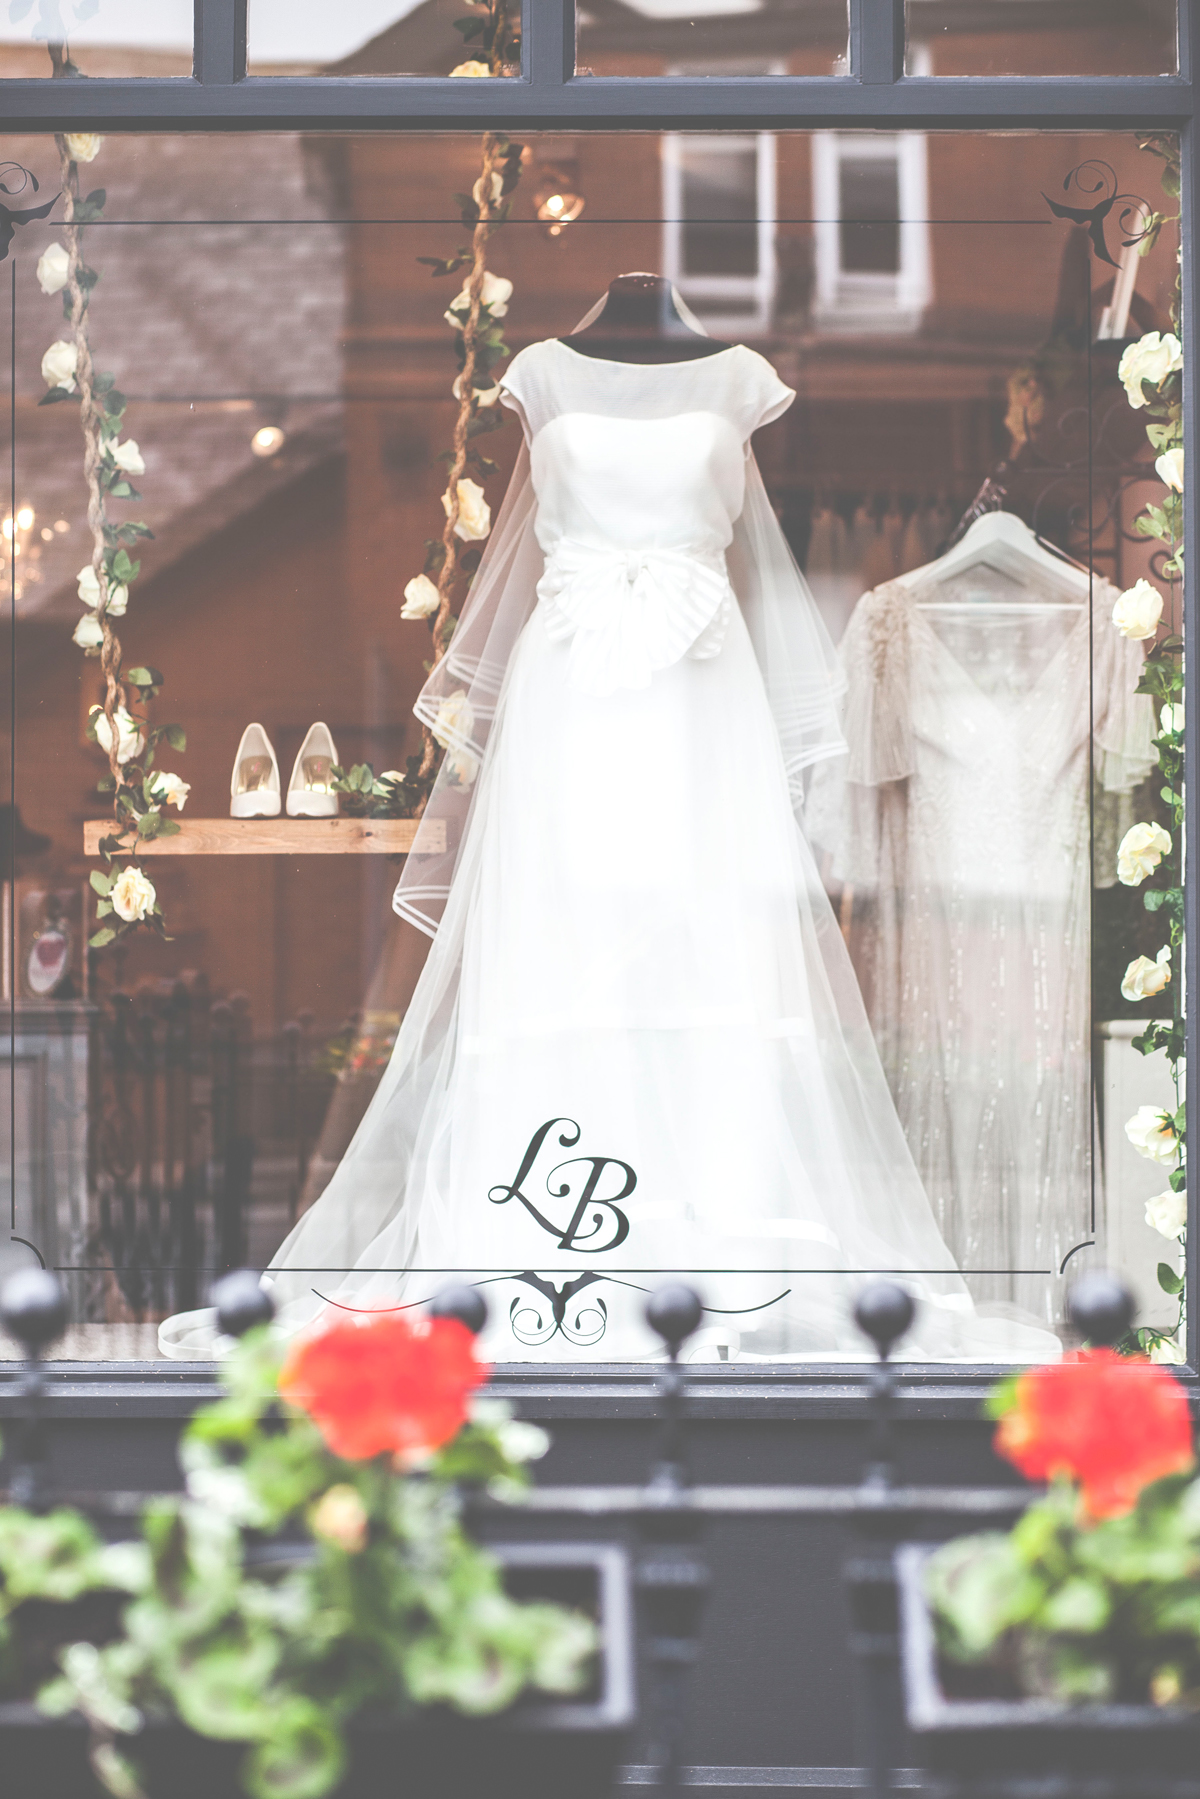 Lulu Browns Bridal boutique.